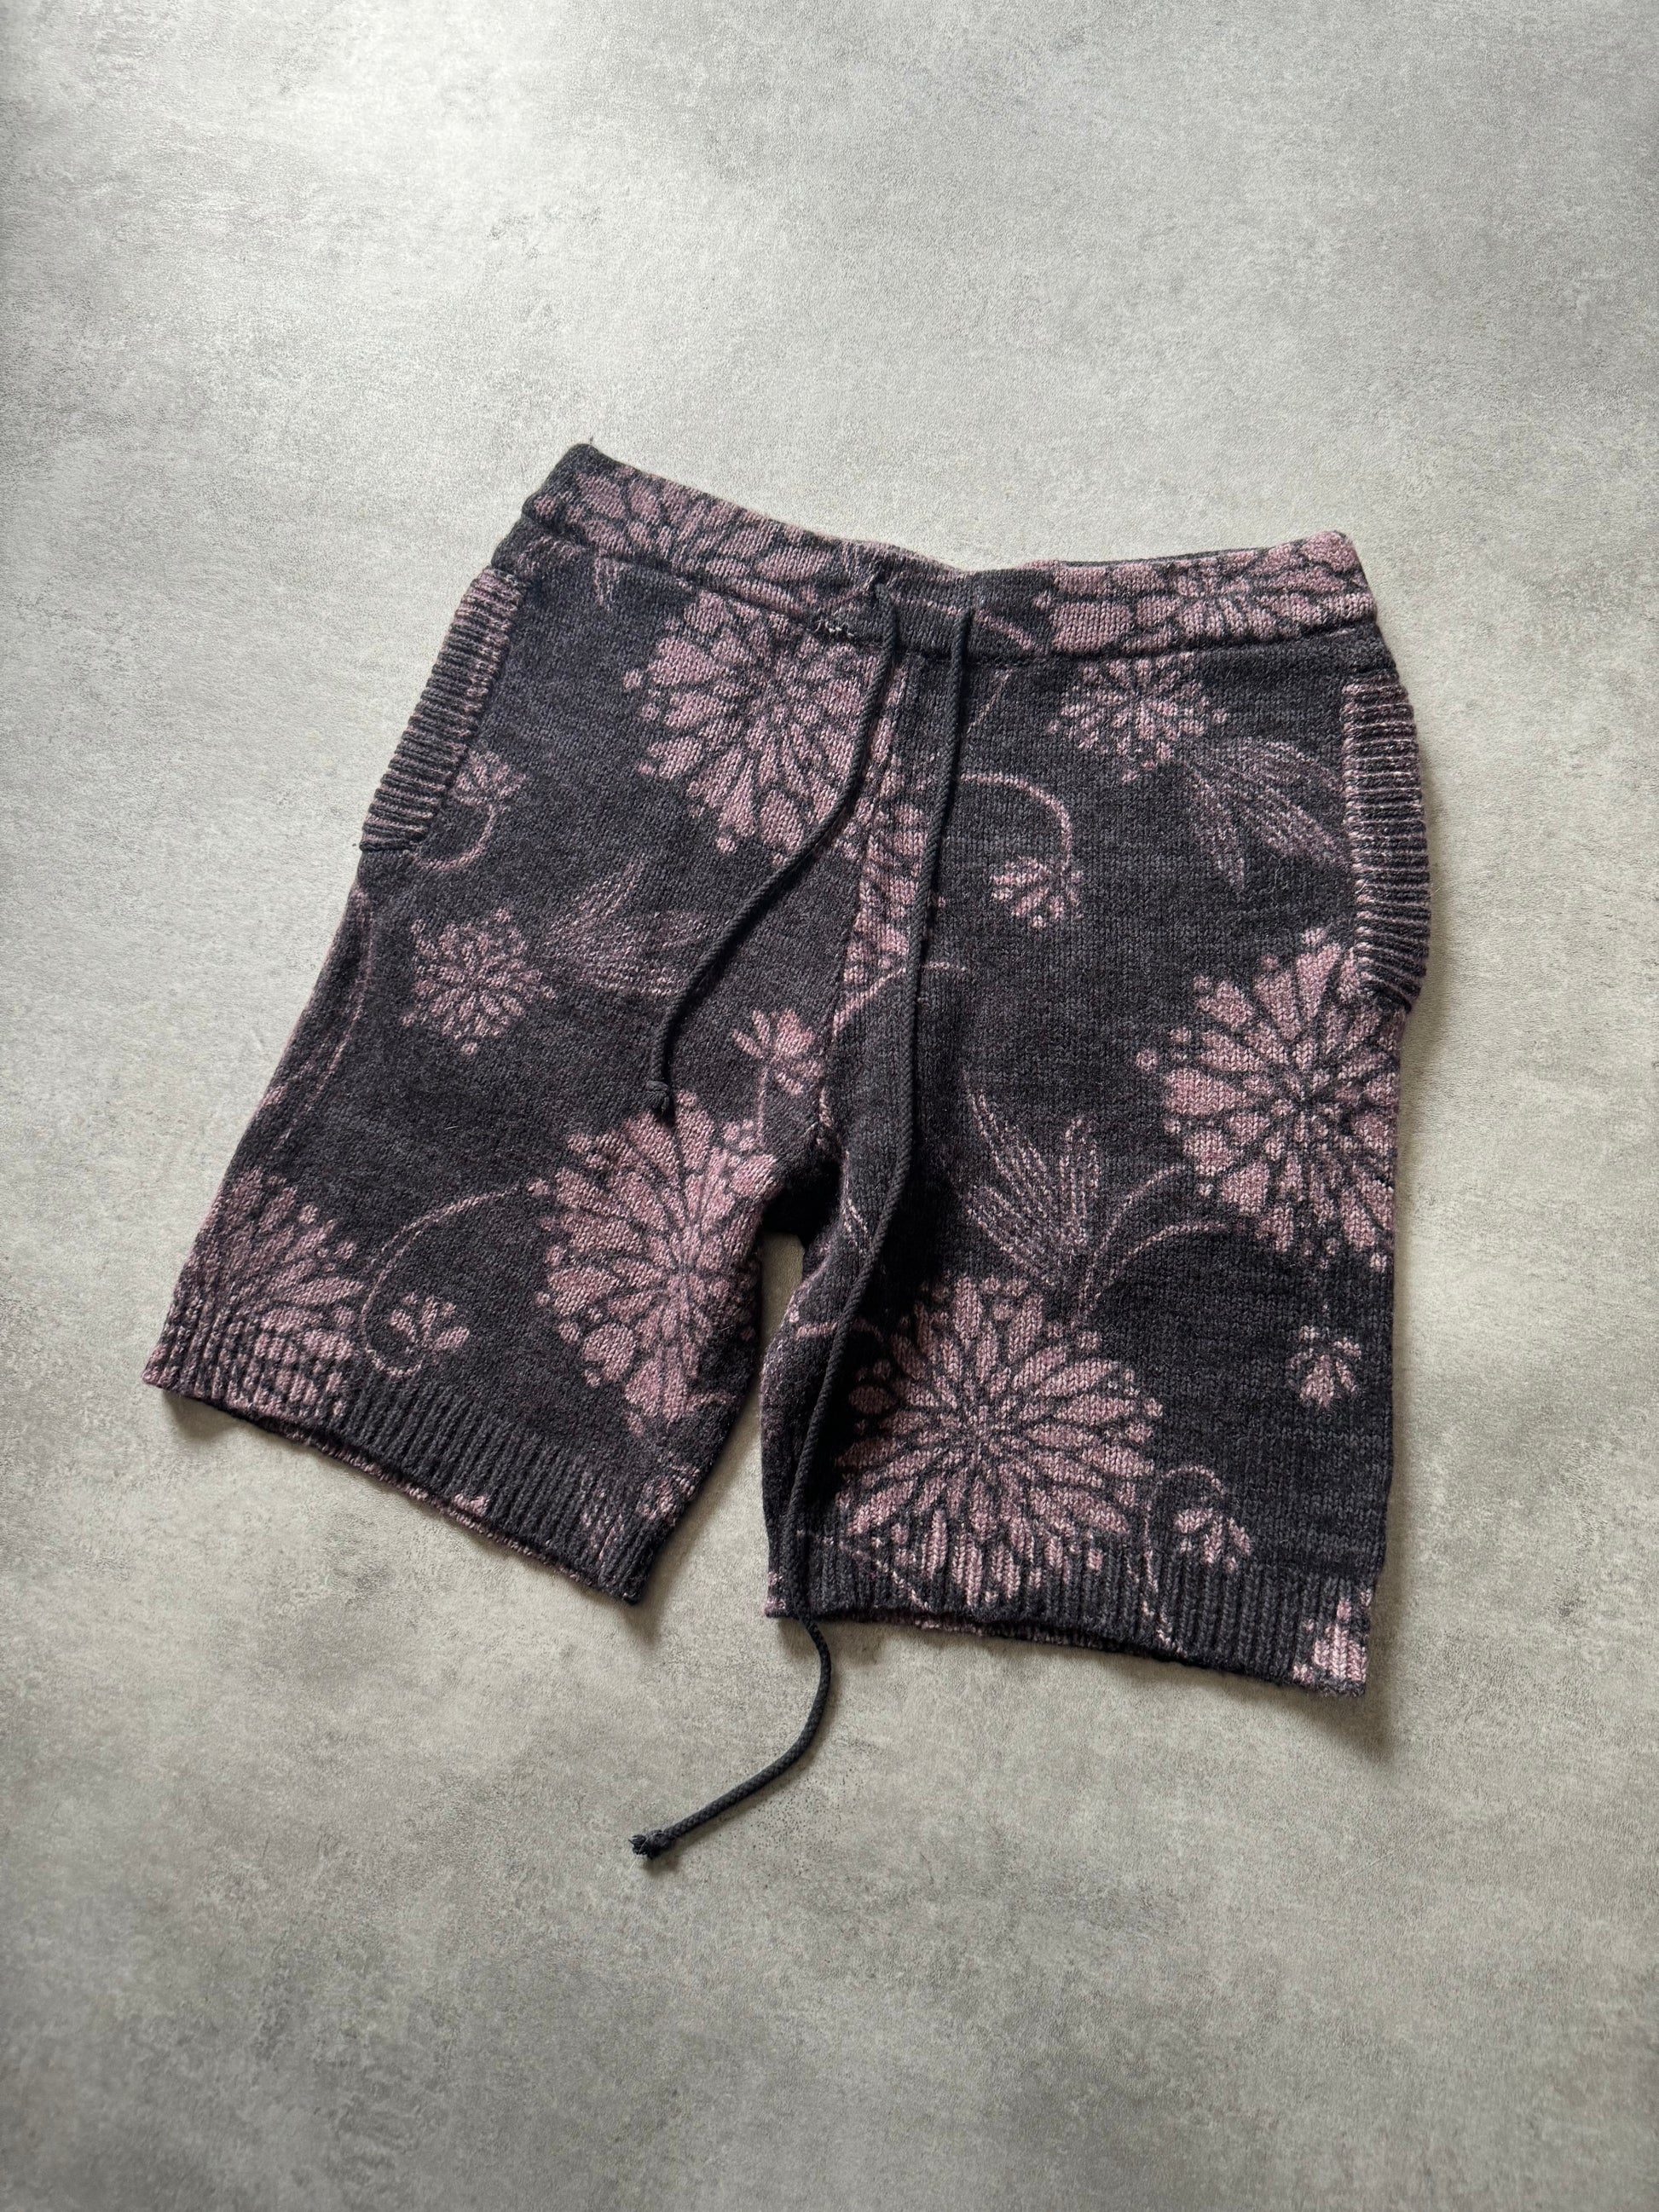 SS2014 Dries Van Noten Purple Flowers Relaxed Shorts (M) - 8